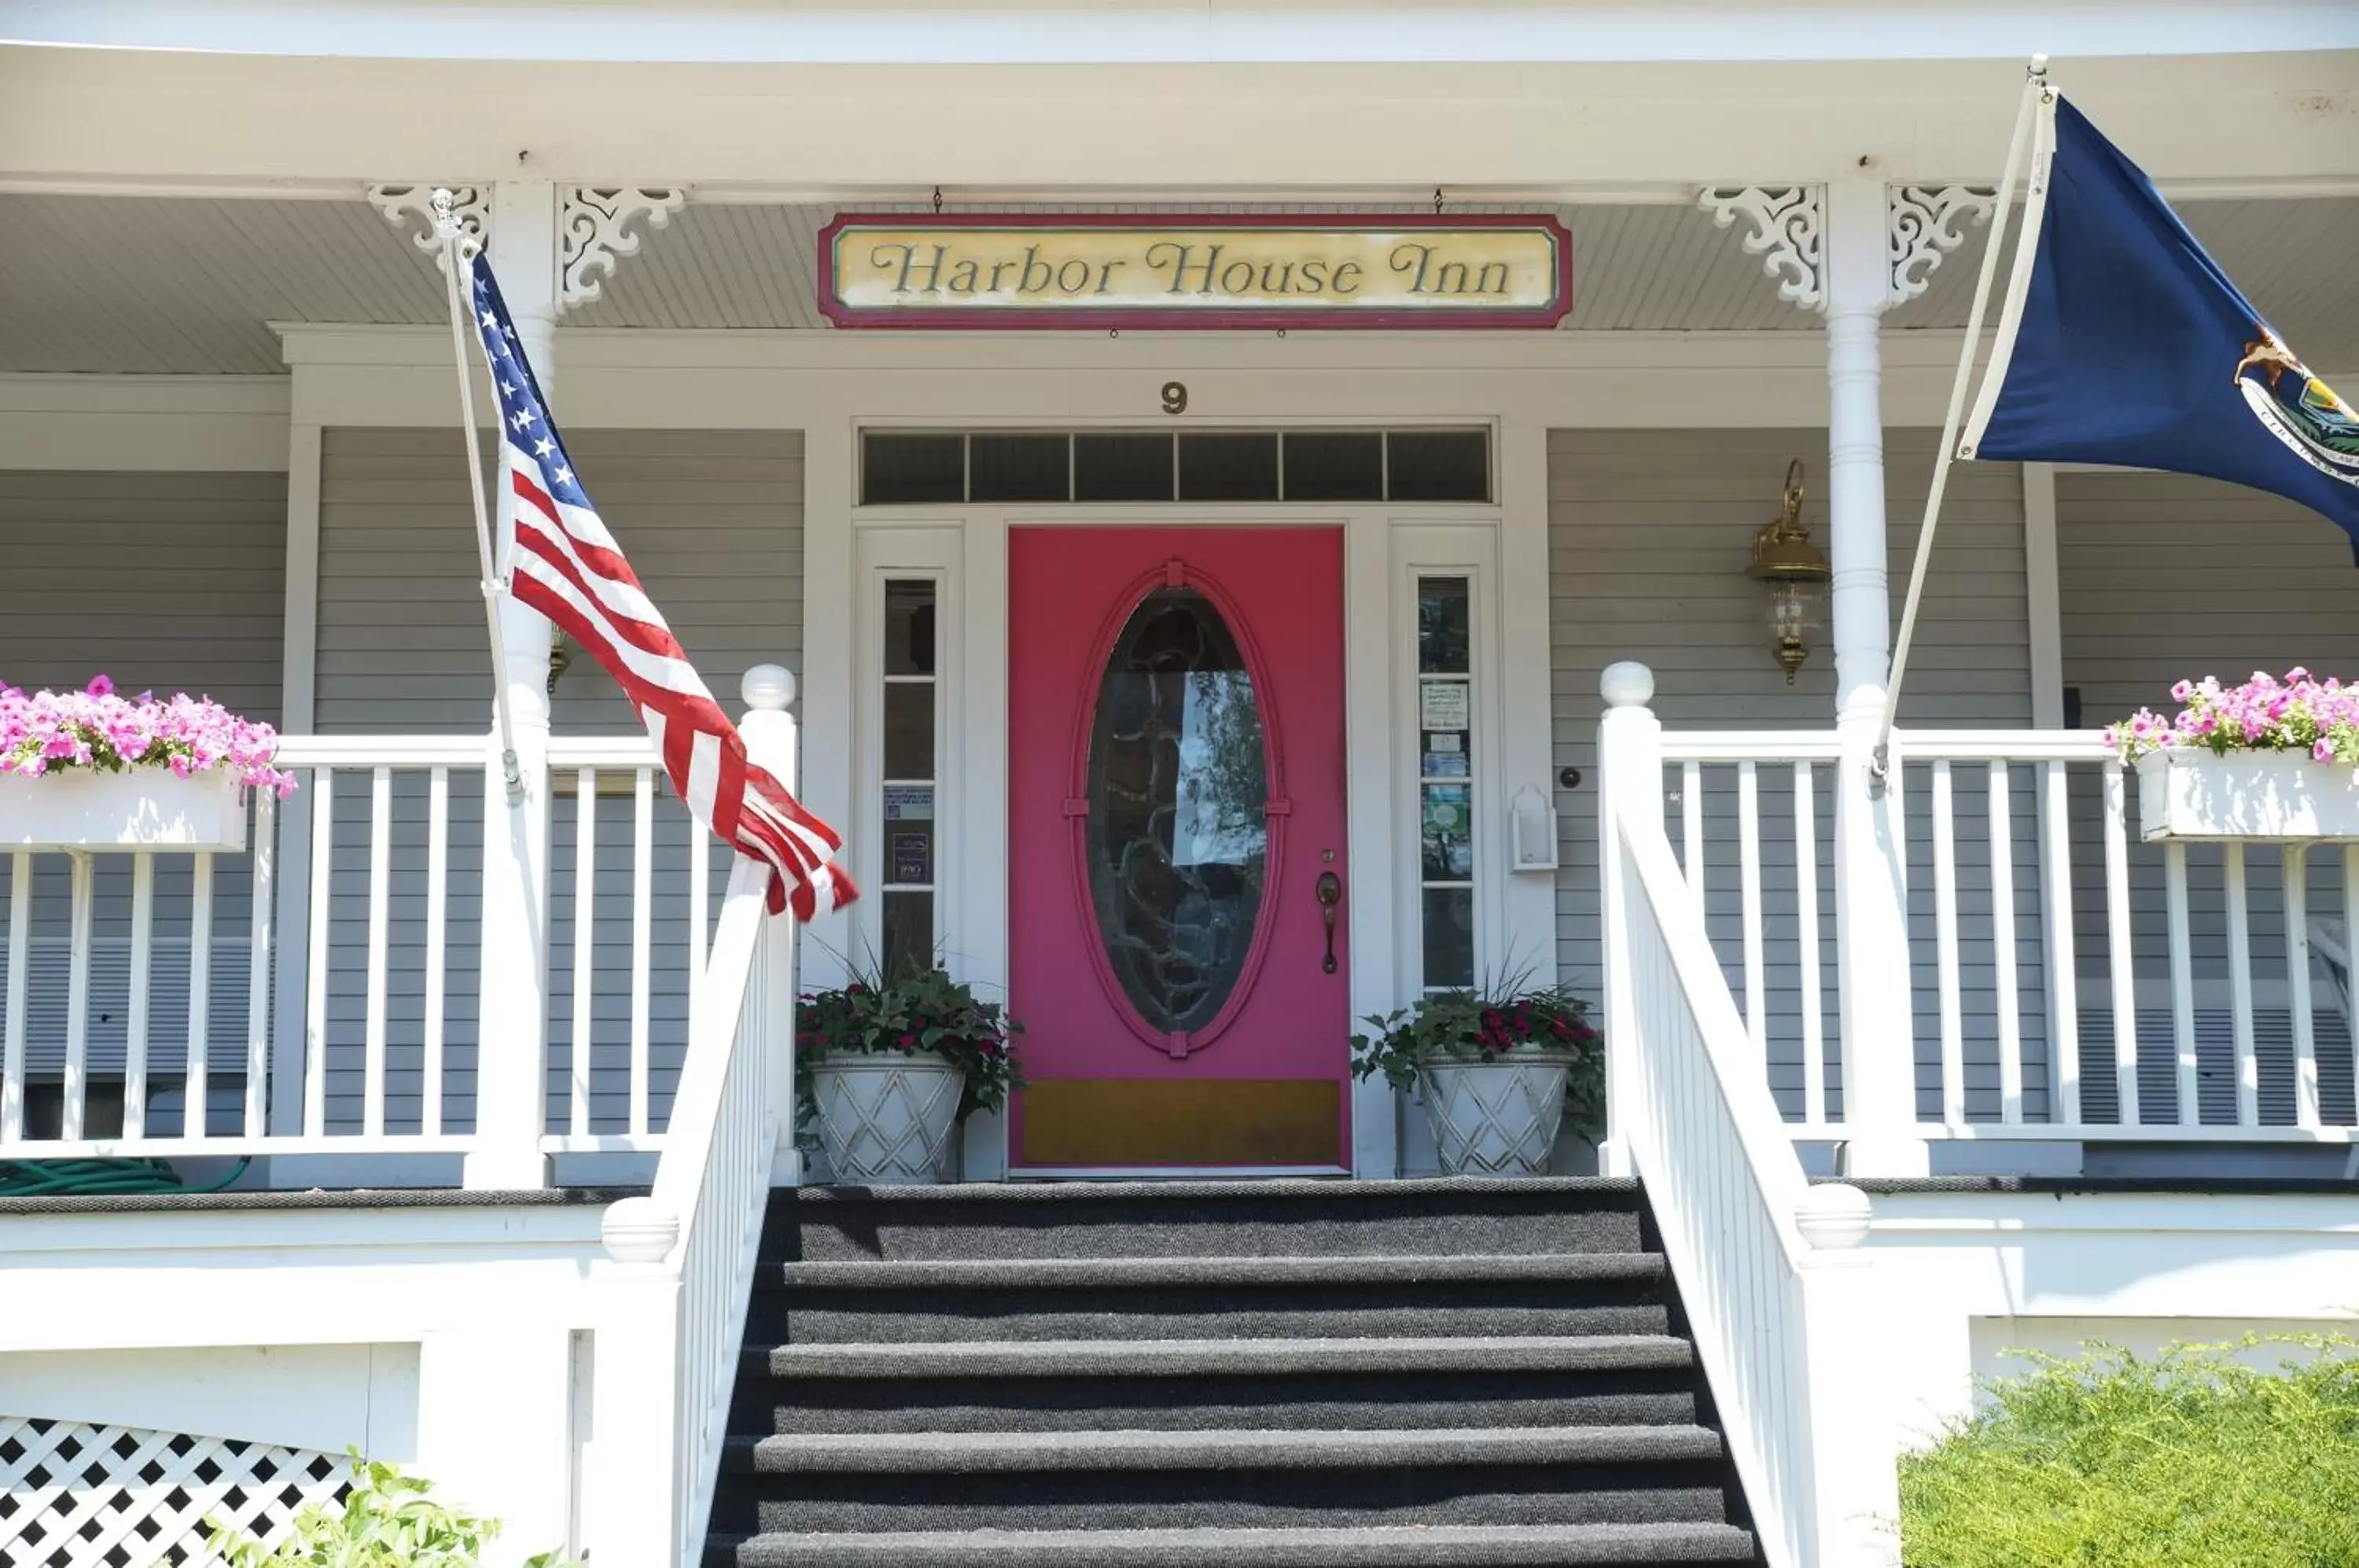 Facade/entrance in Harbor House Inn